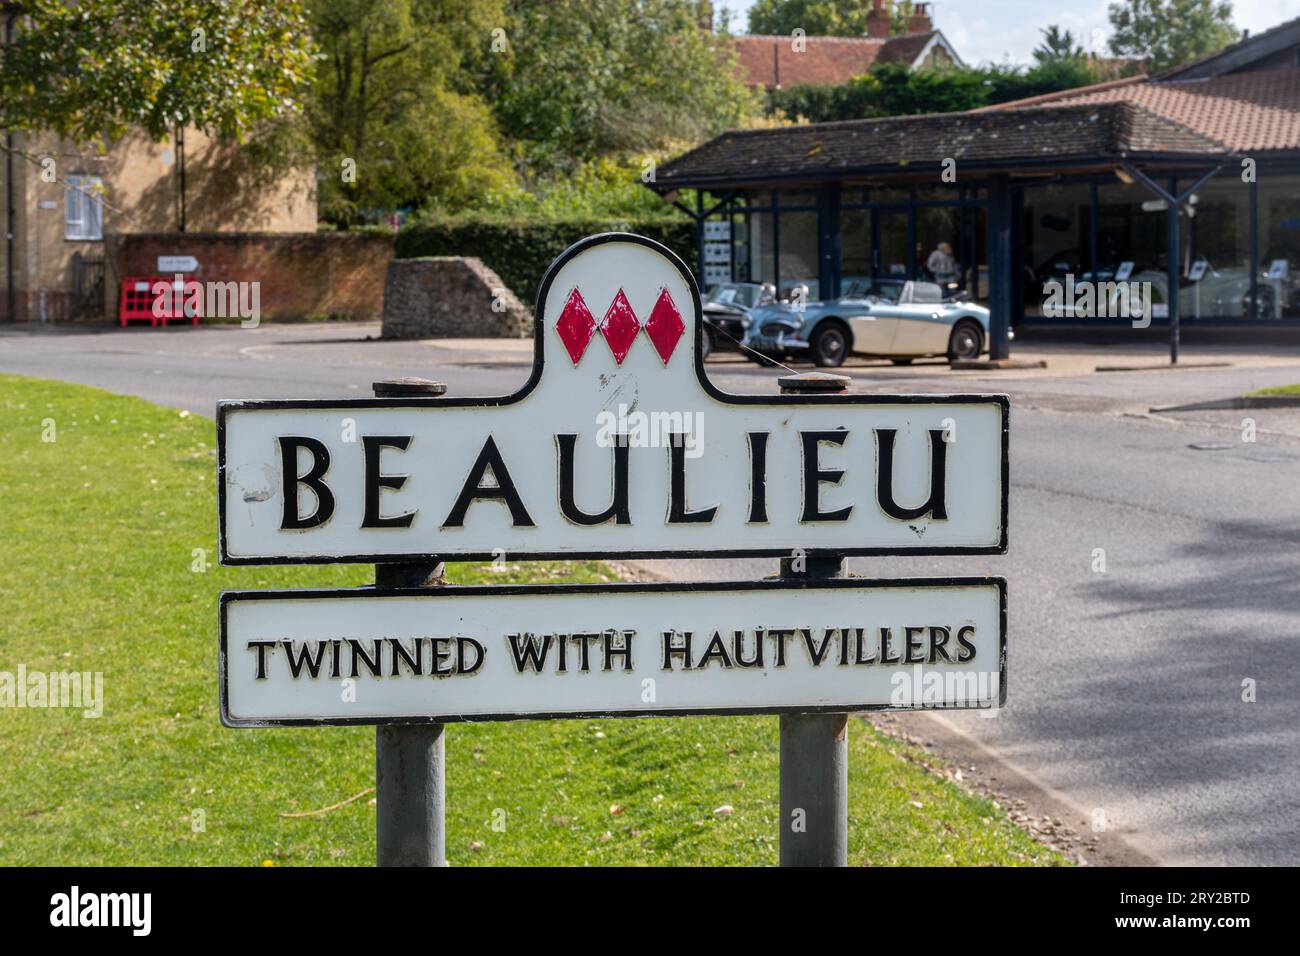 Beaulieu village, twinning sign, twinned with Hautvillers, Hampshire, England, UK Stock Photo